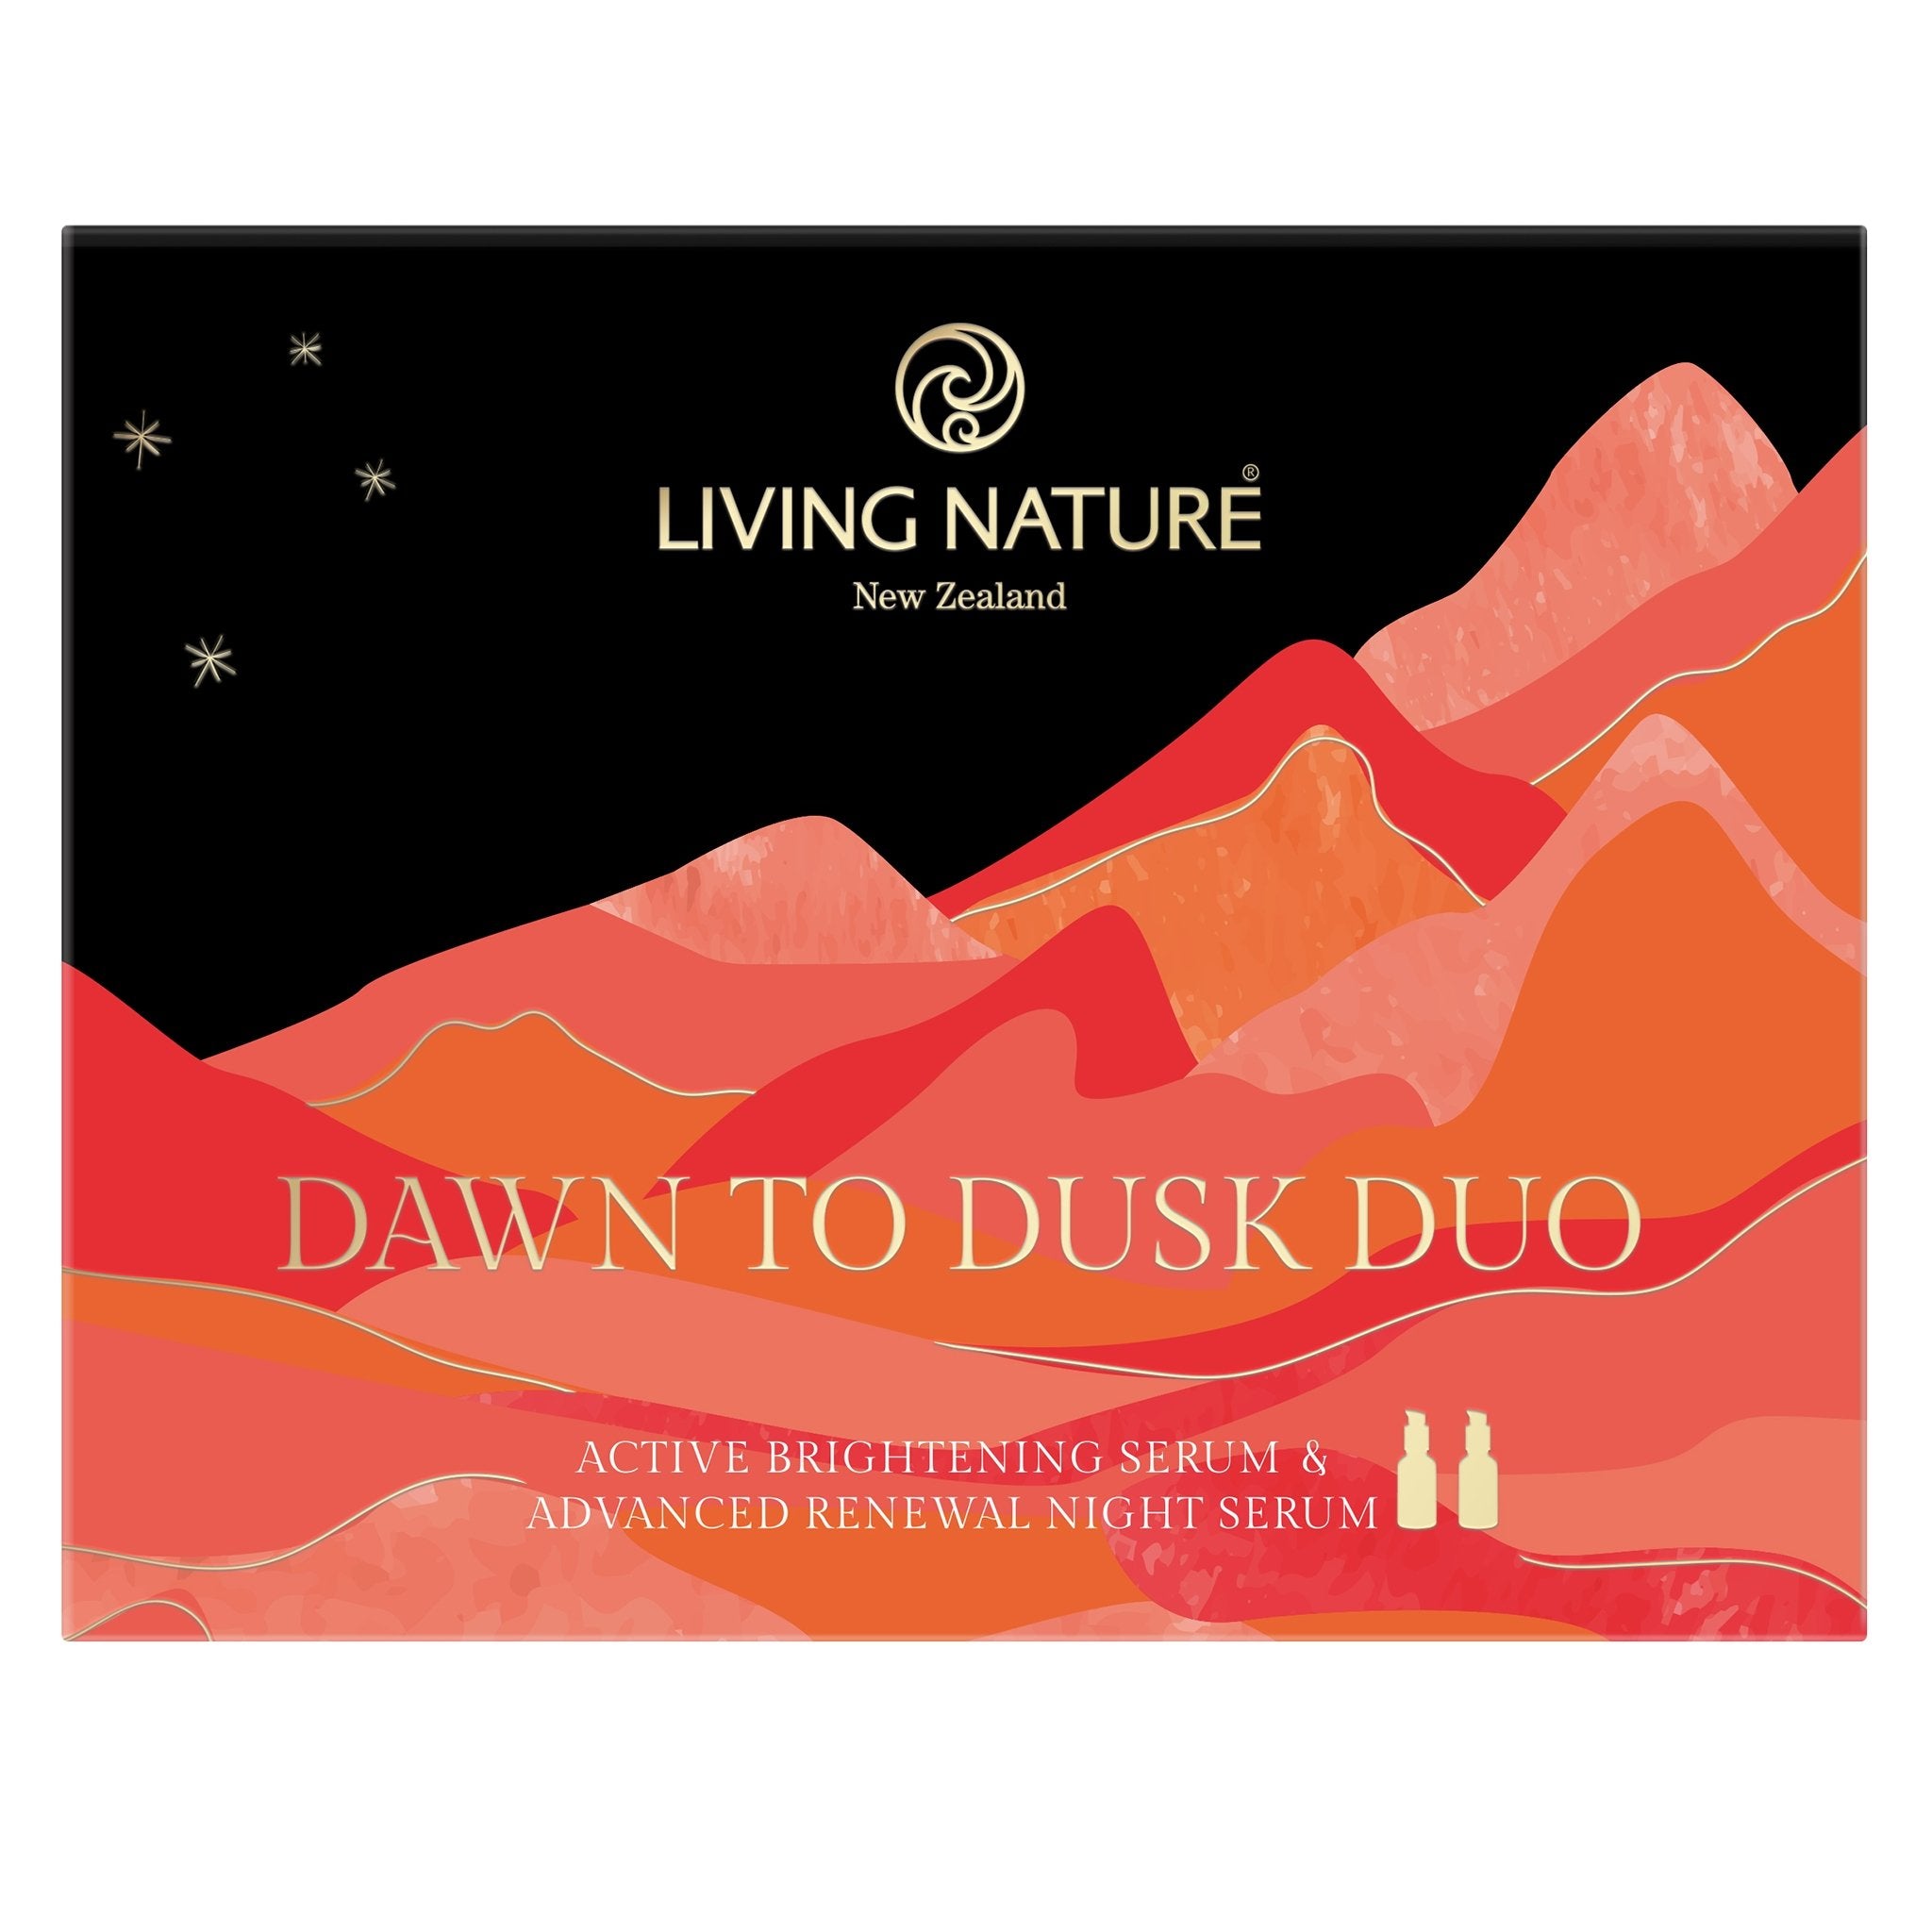 Dawn to Dusk Duo - Worth £64